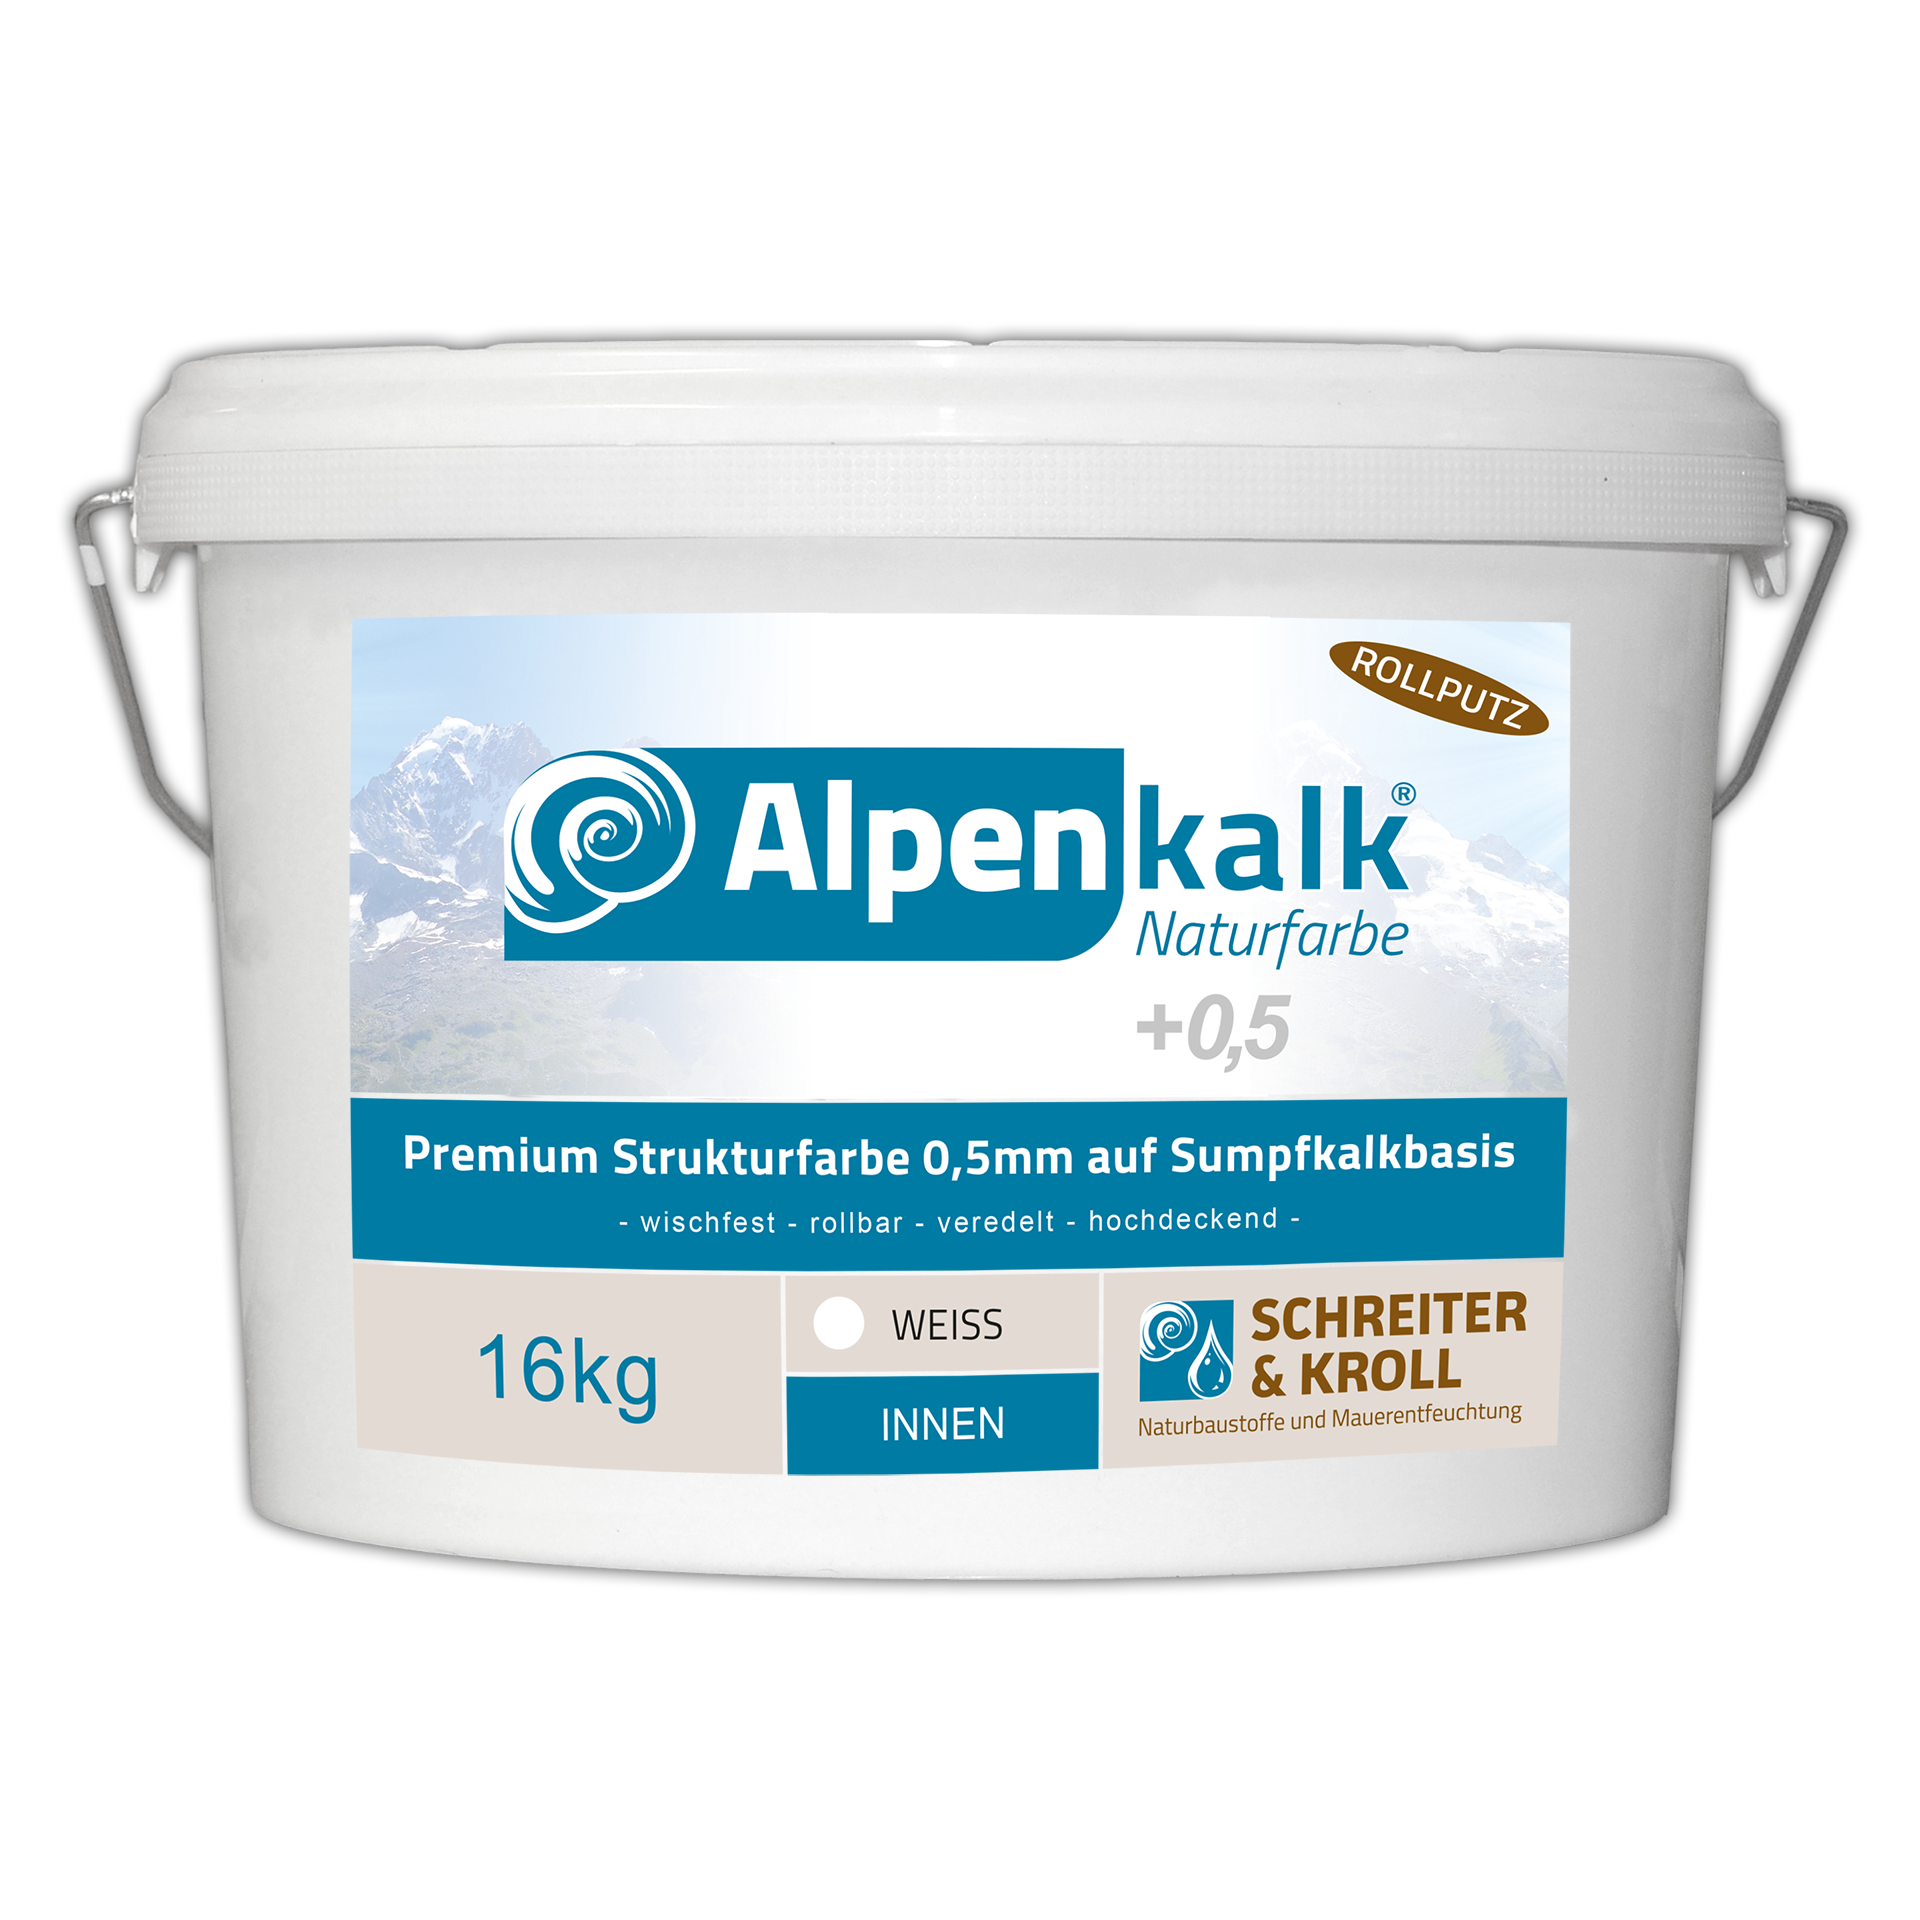 Alpenkalk Premium Strukturfarbe 16kg 0.5mm